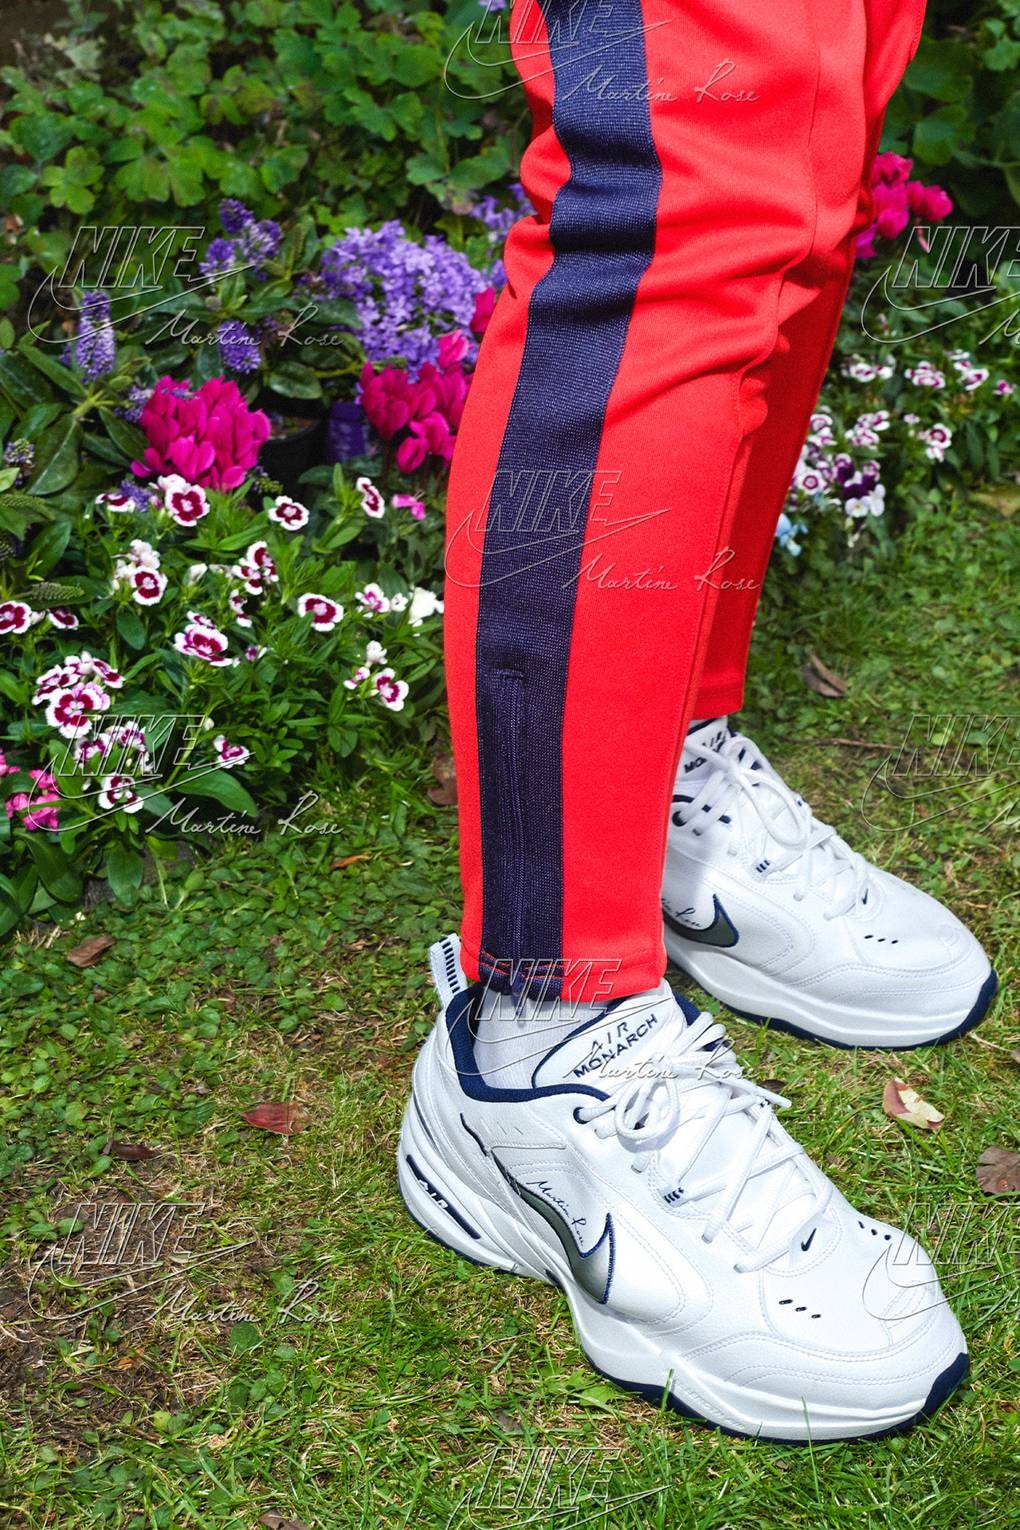 Martine Rose x Nike 全新聯名系列於 Craigslist 搶先發售